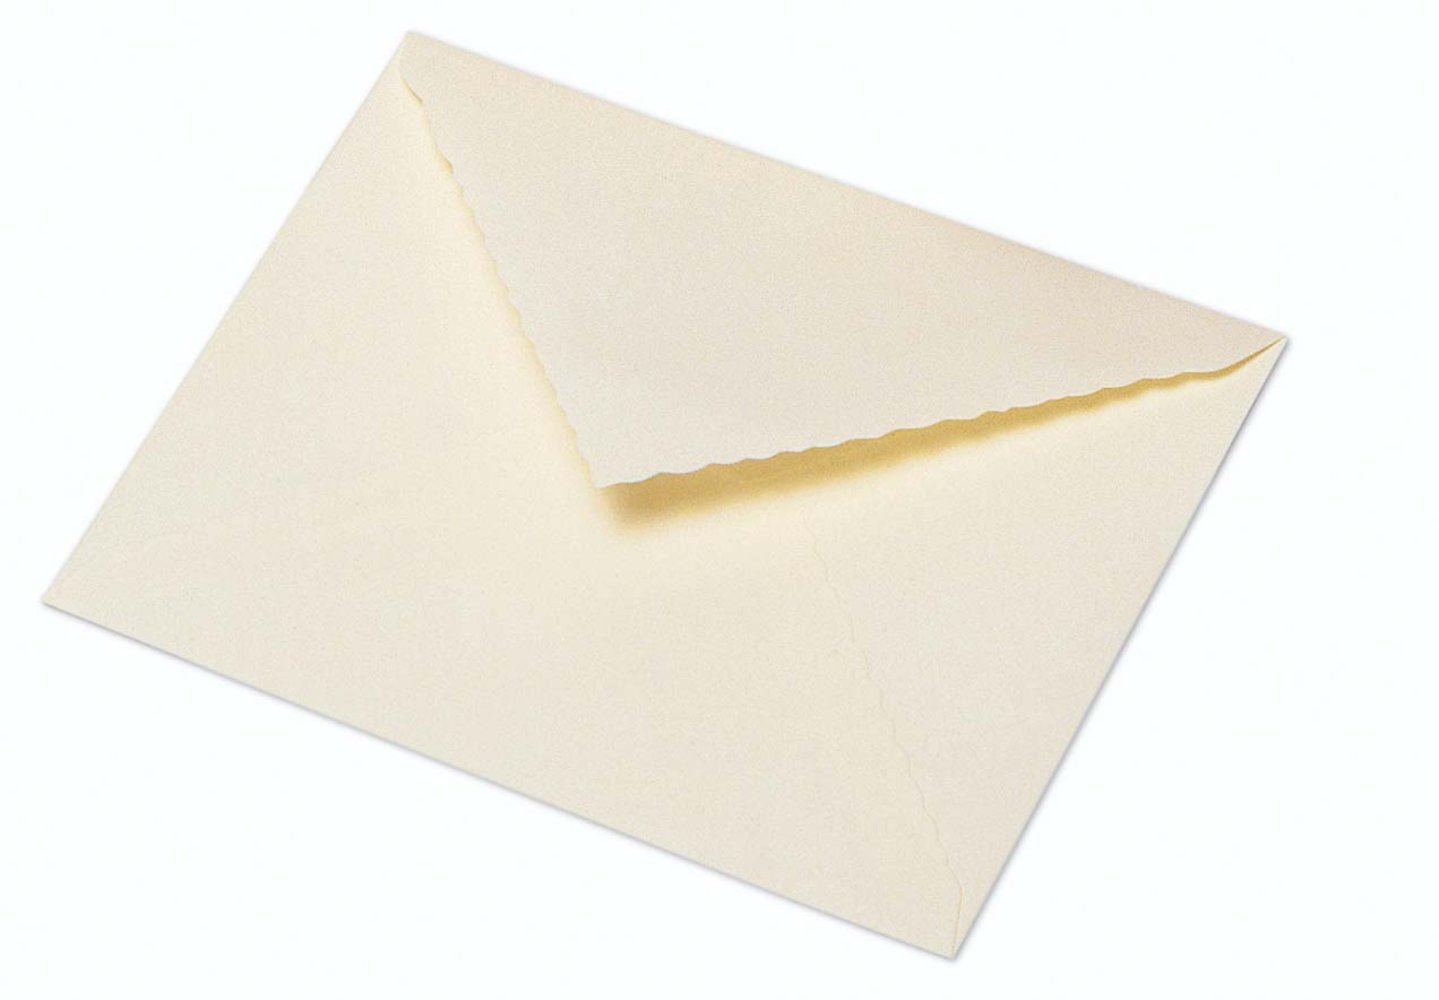 G. Lalo Open Stock Deckle Edge French Wedding 5 ¼ x 3 ½ Envelopes